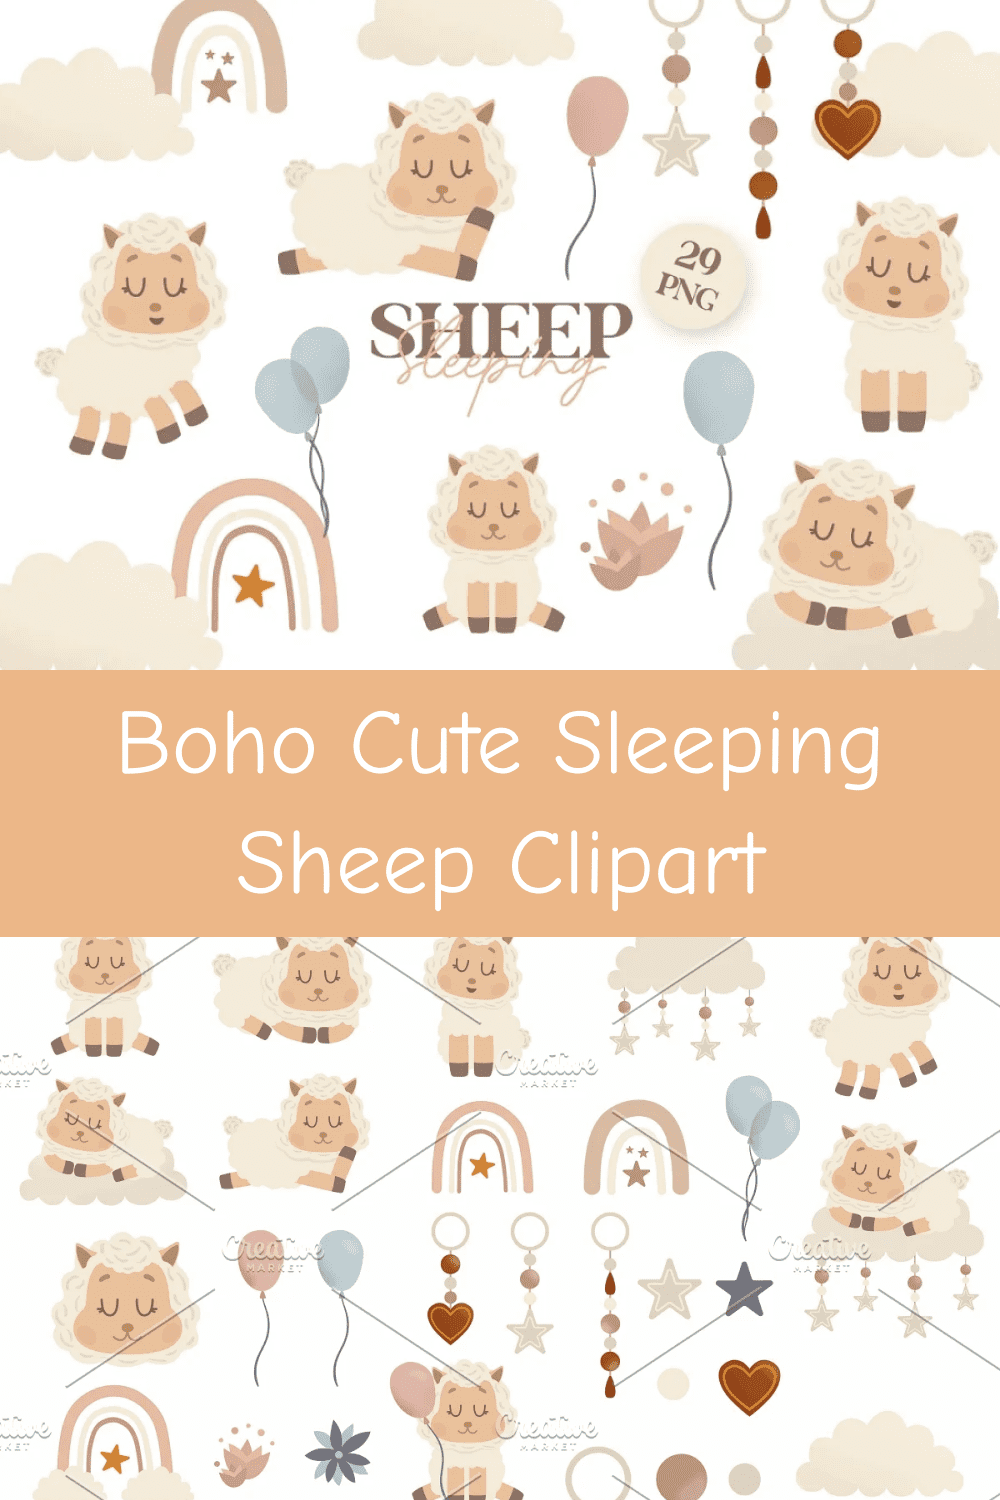 Boho Cute Sleeping Sheep Clipart.